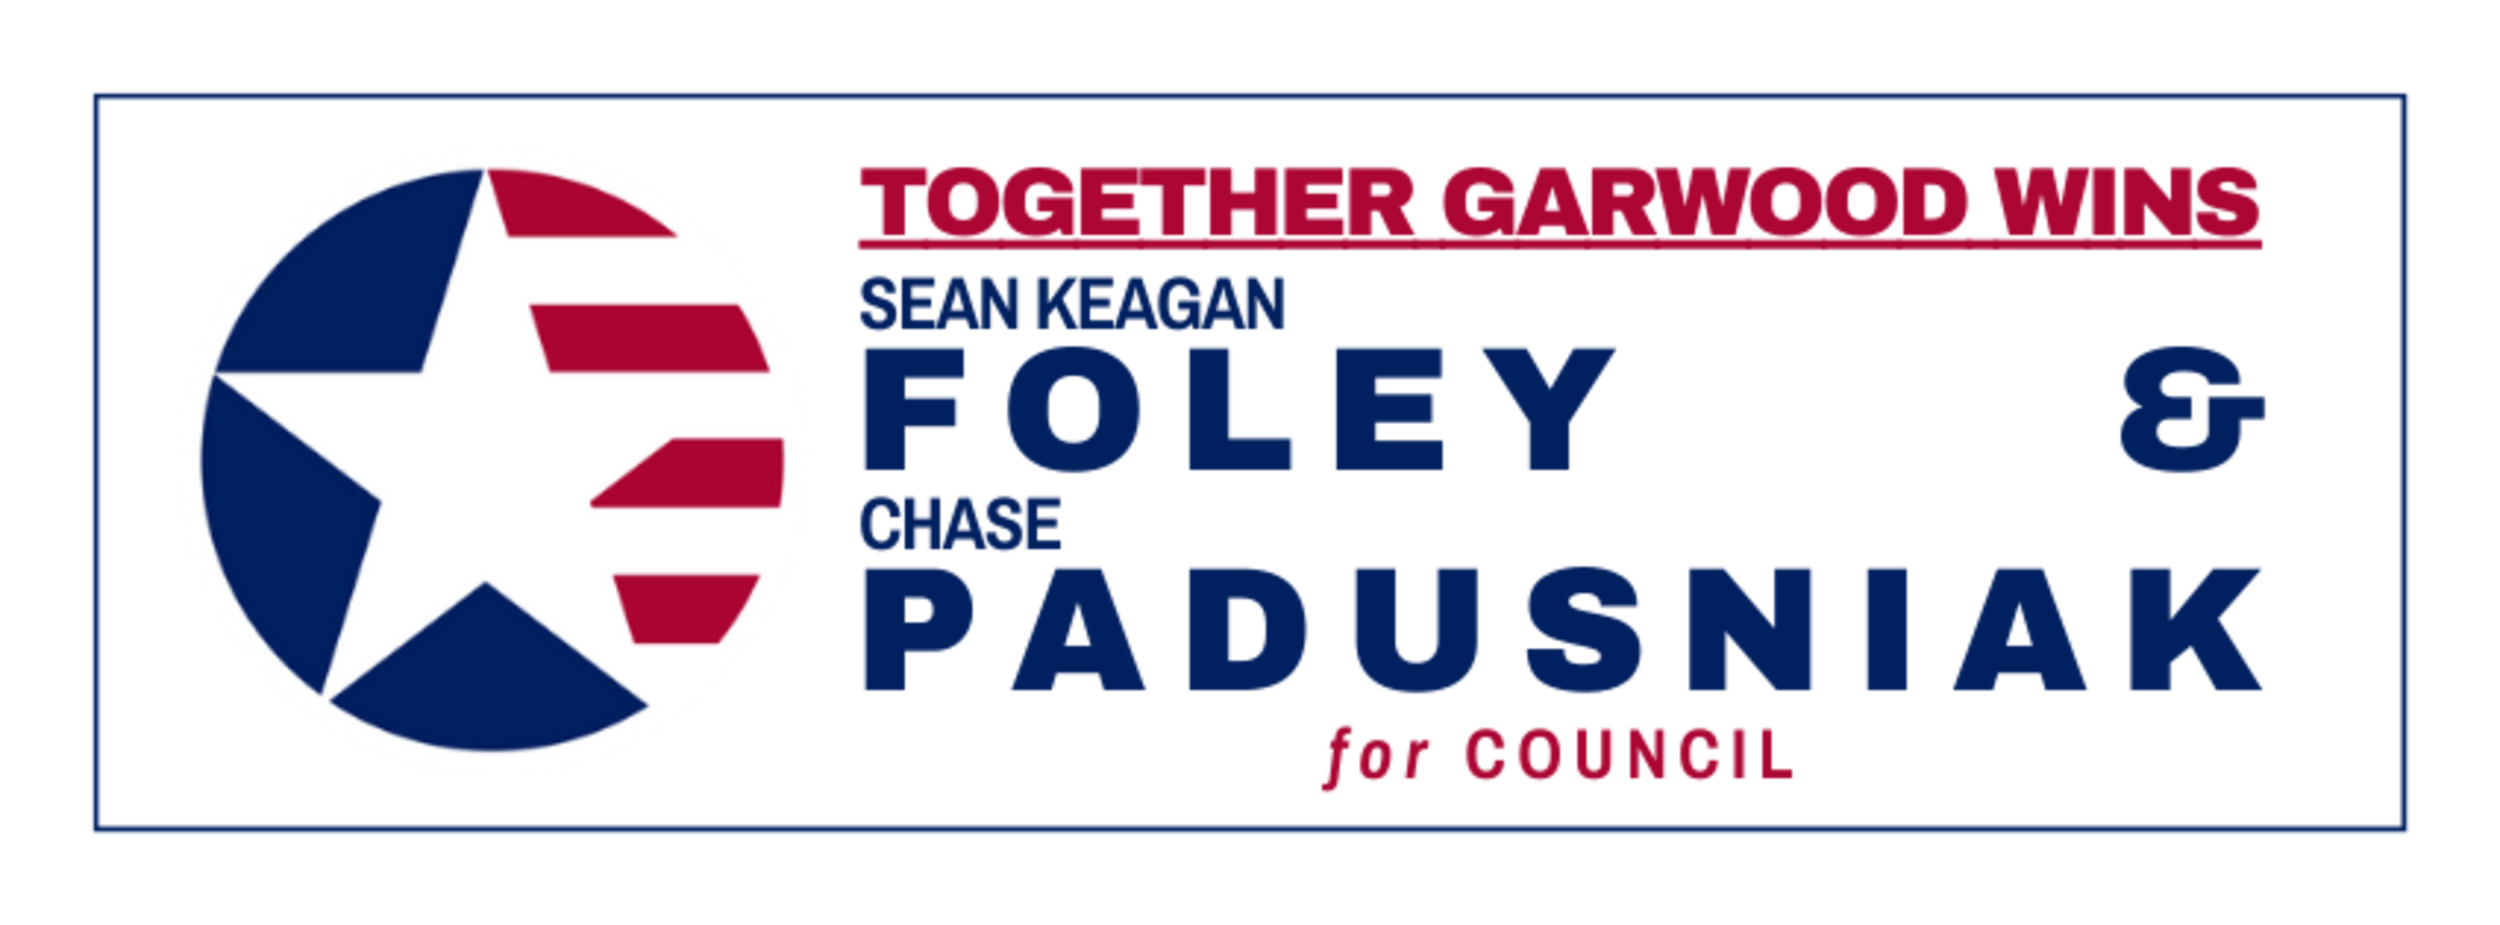 Together Garwood Wins, Foley and Padusniak for Council